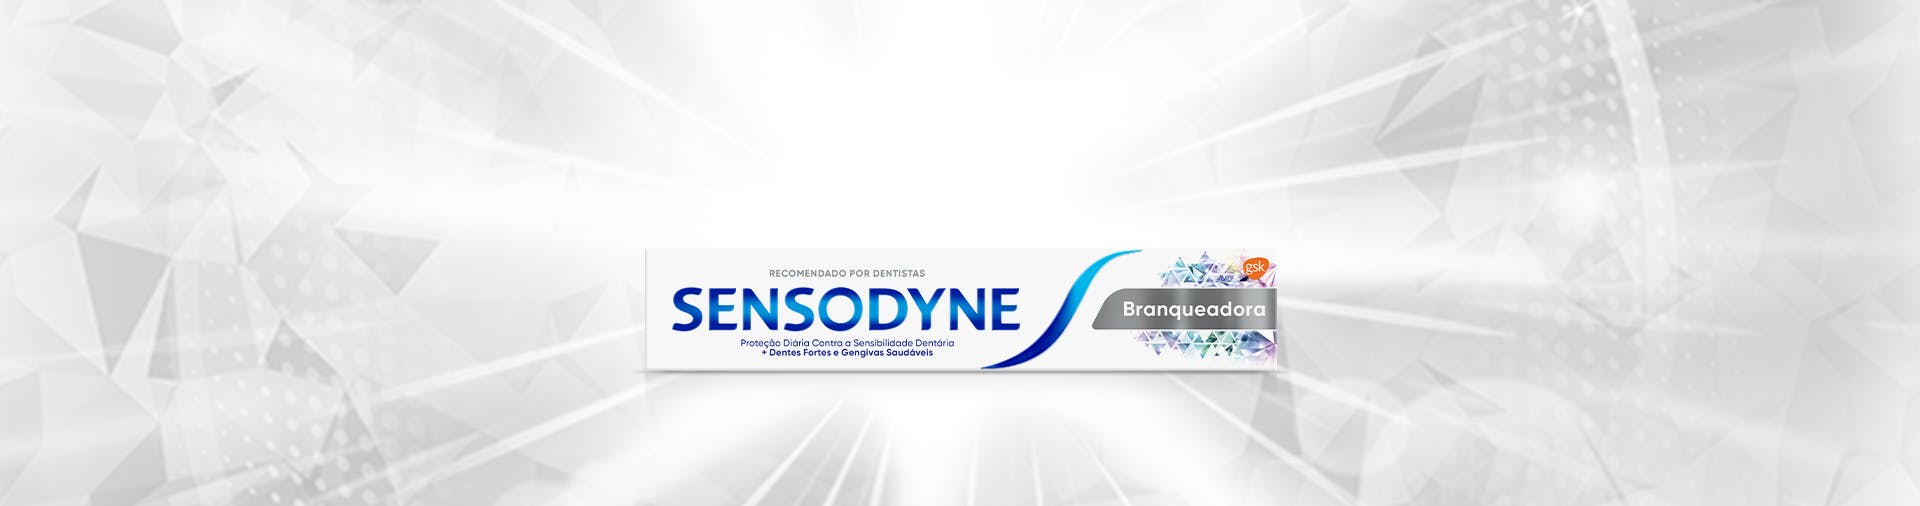 Banner da campanha Sensodyne Branqueadora